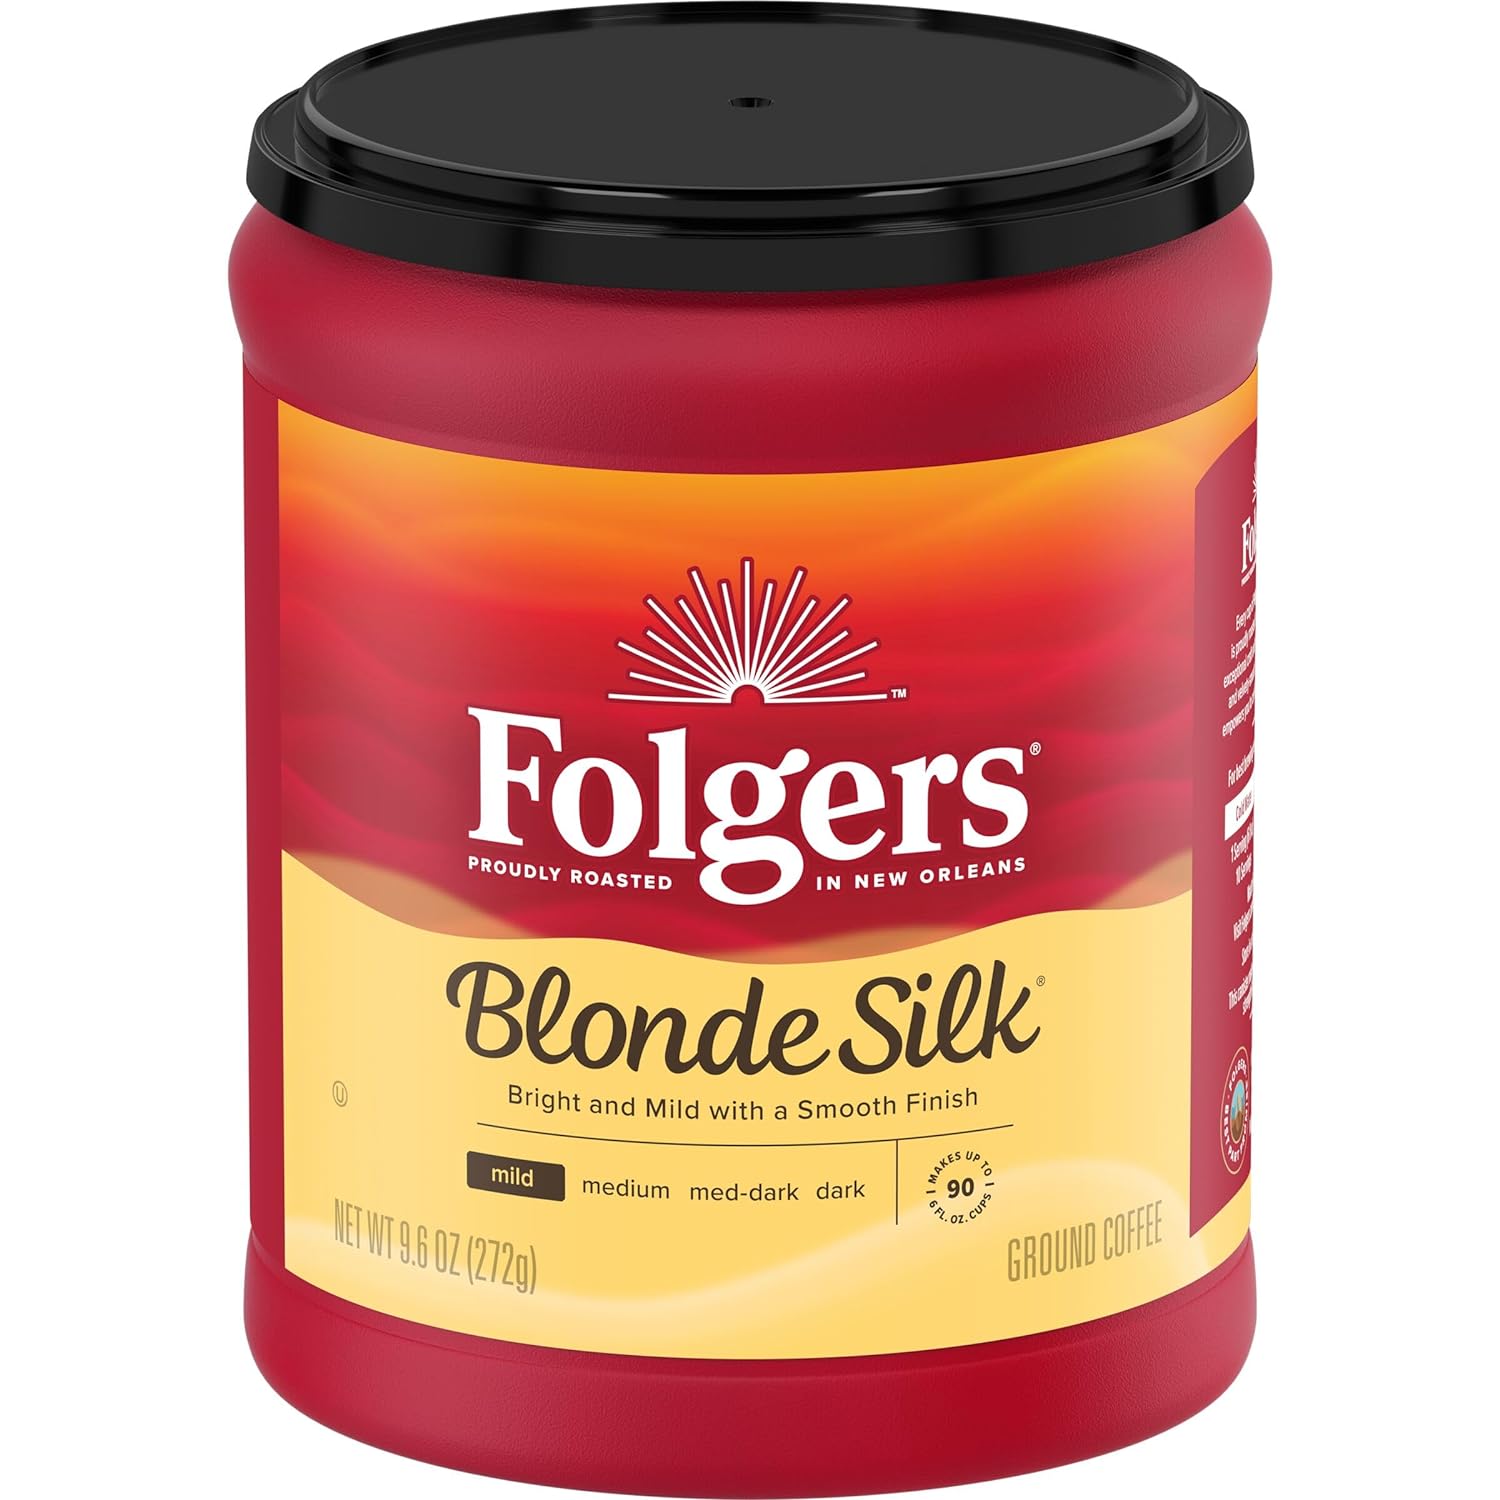 Folgers Blonde Silk Light Roast Ground Coffee, 9.6 Ounce (Pack of 6)